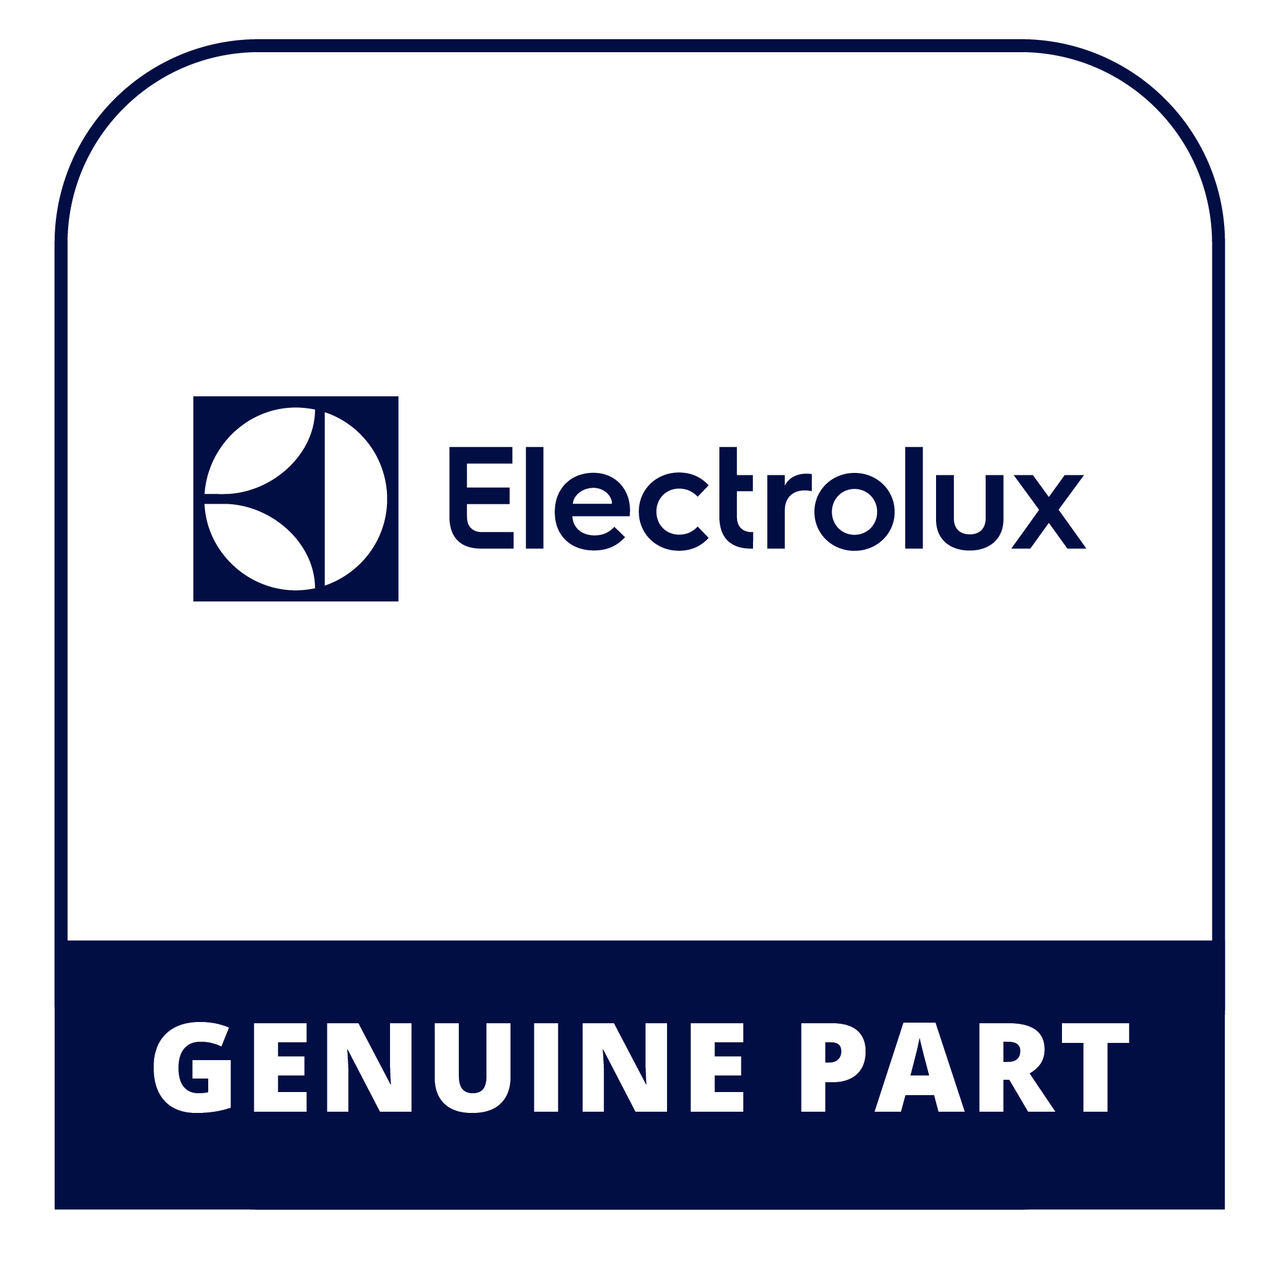 Frigidaire - Electrolux 316519205 Board - Genuine Electrolux Part